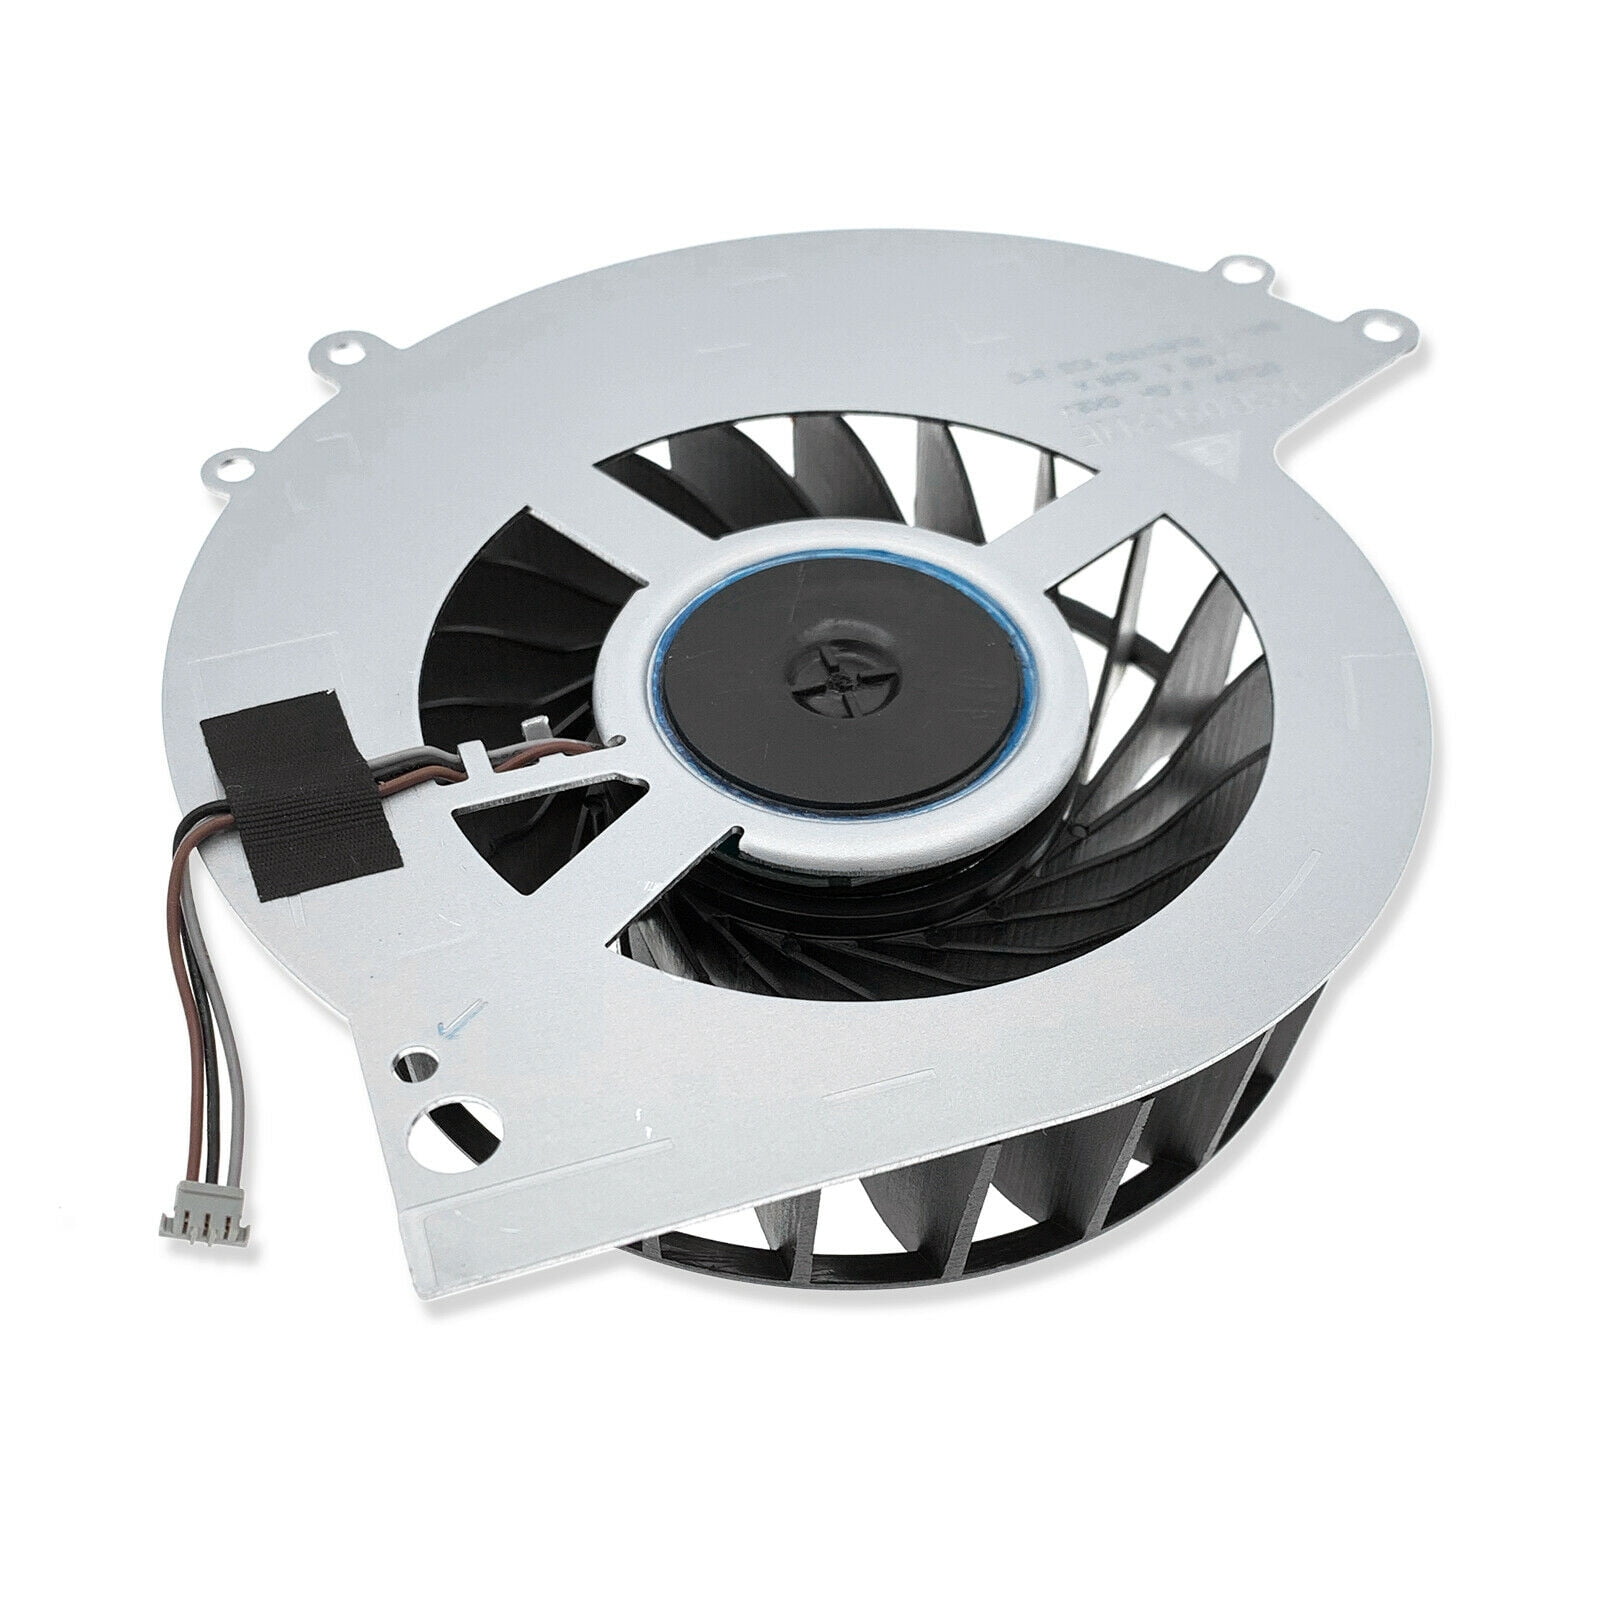 INTERNAL Cooling Fan SONY PLAYSTATION 4 PS4 CUH-12XX CUH-1200 CUH-1200AB01 1215A 